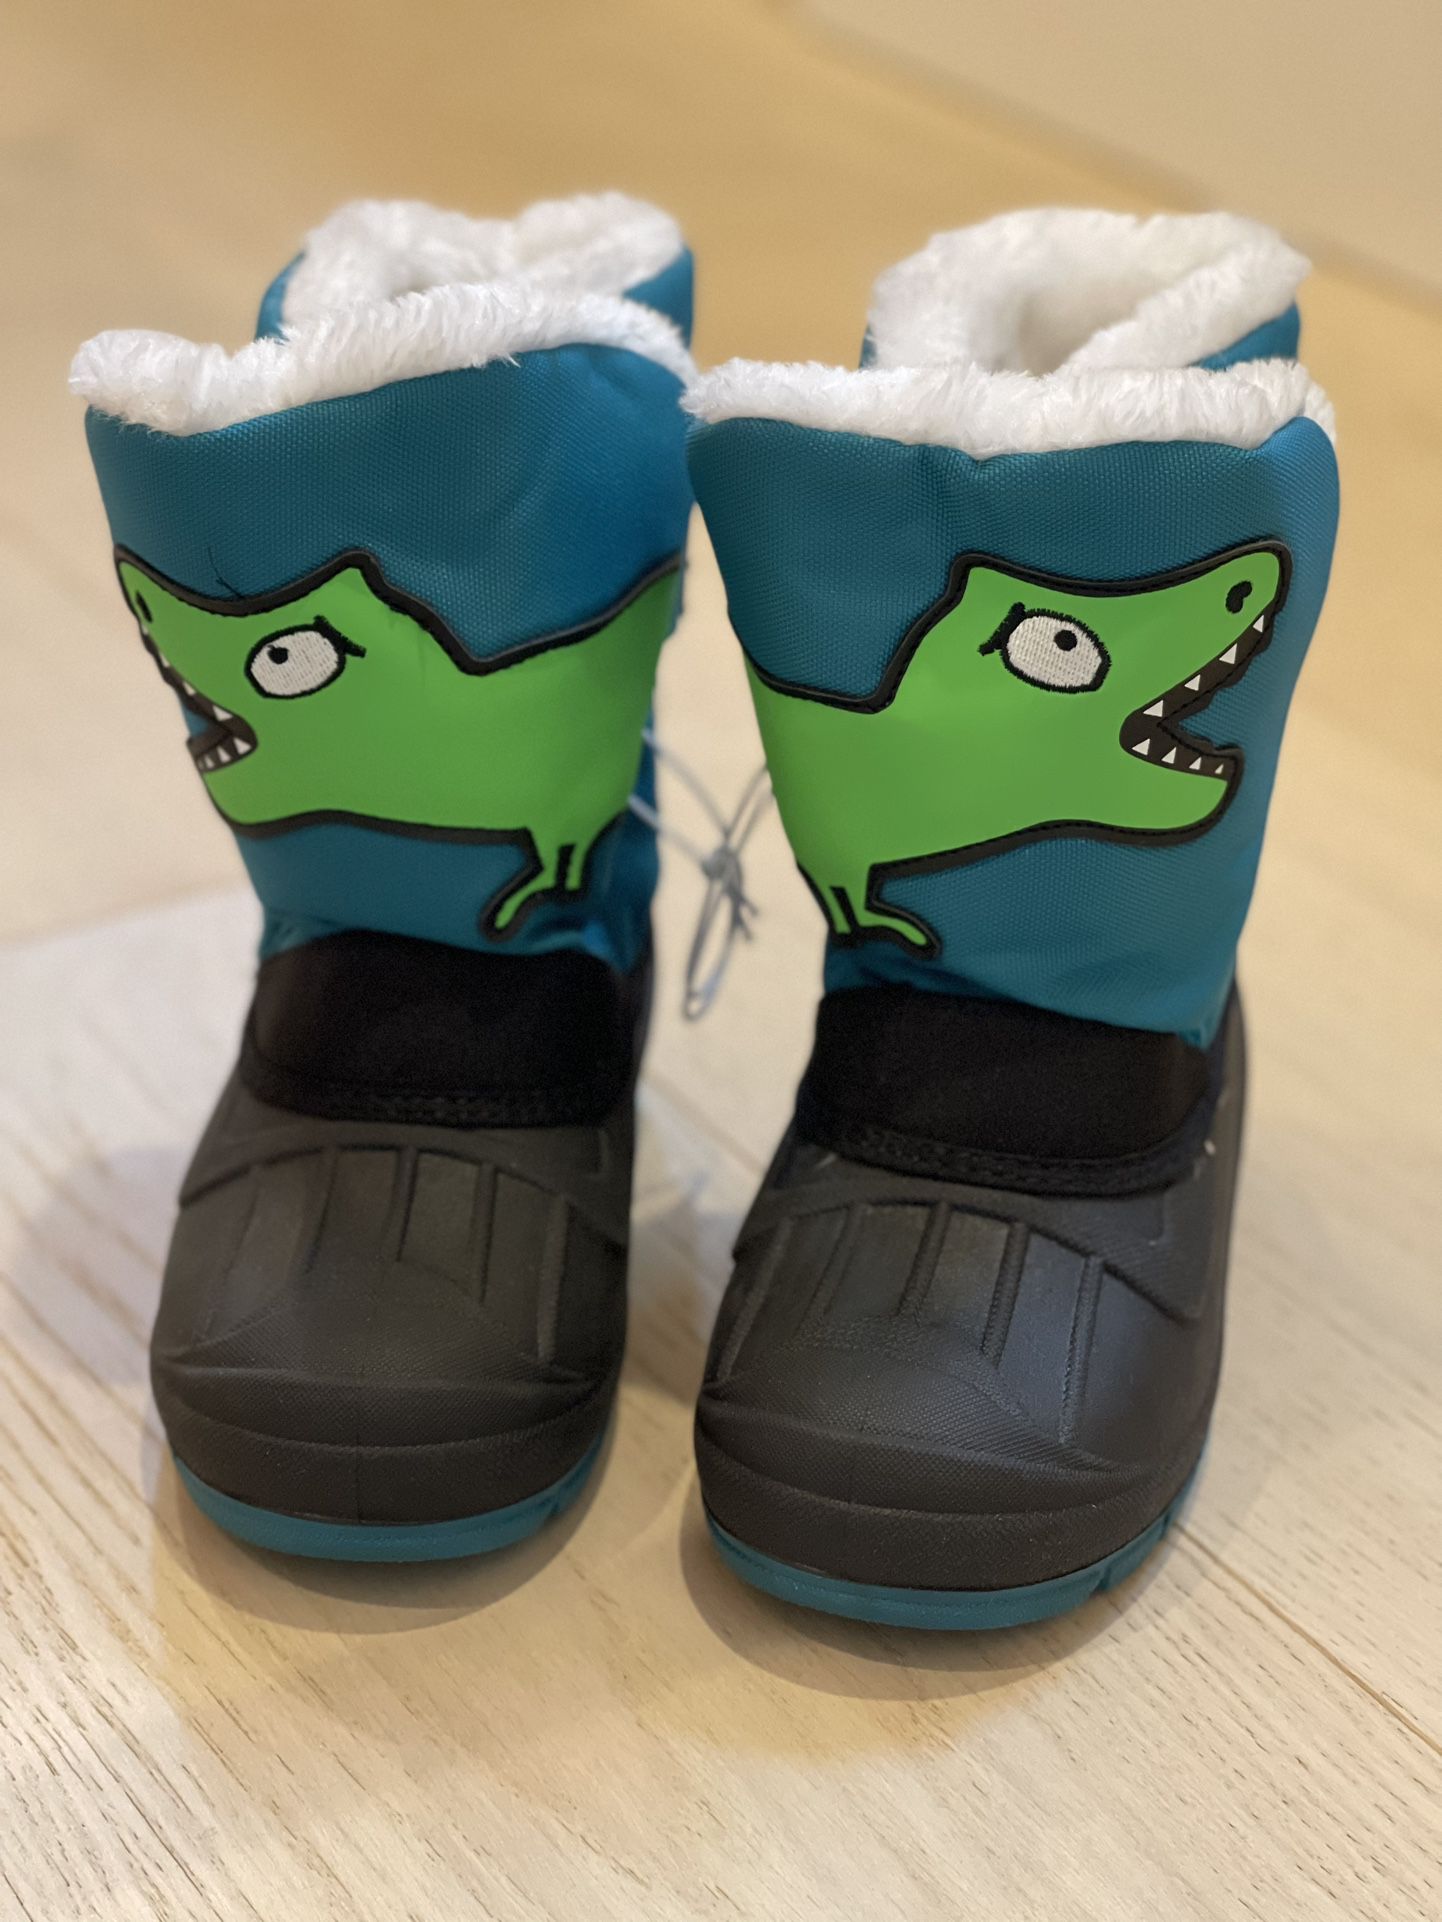 Kids Snow Boots - Size 12